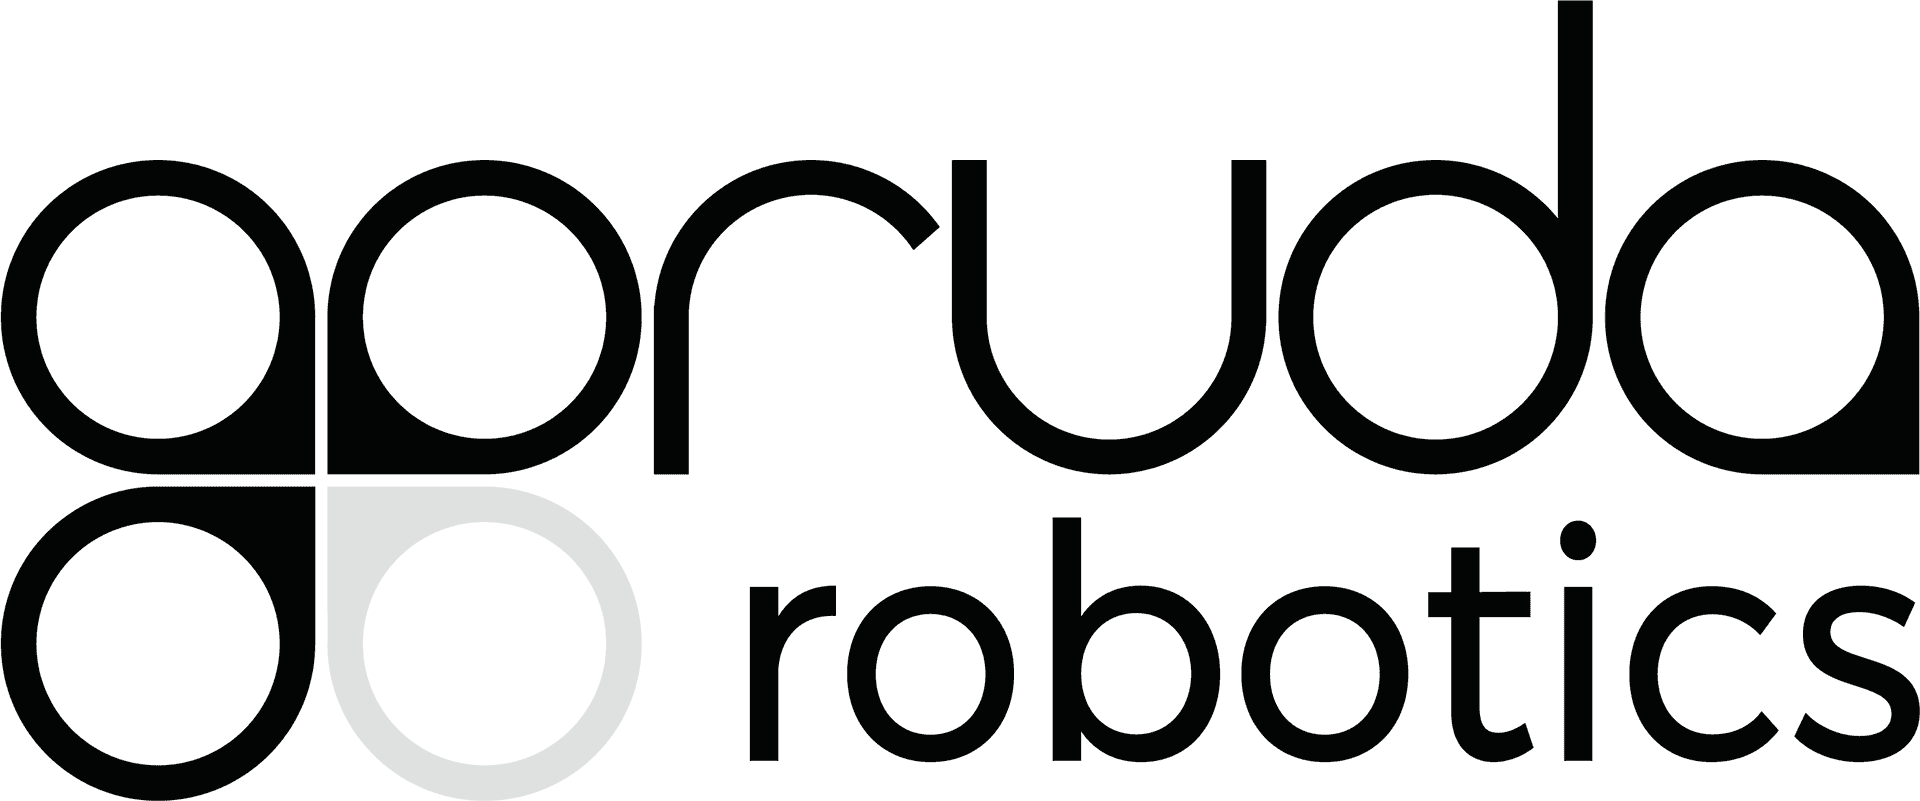 Garuda Robotics Logo PNG image